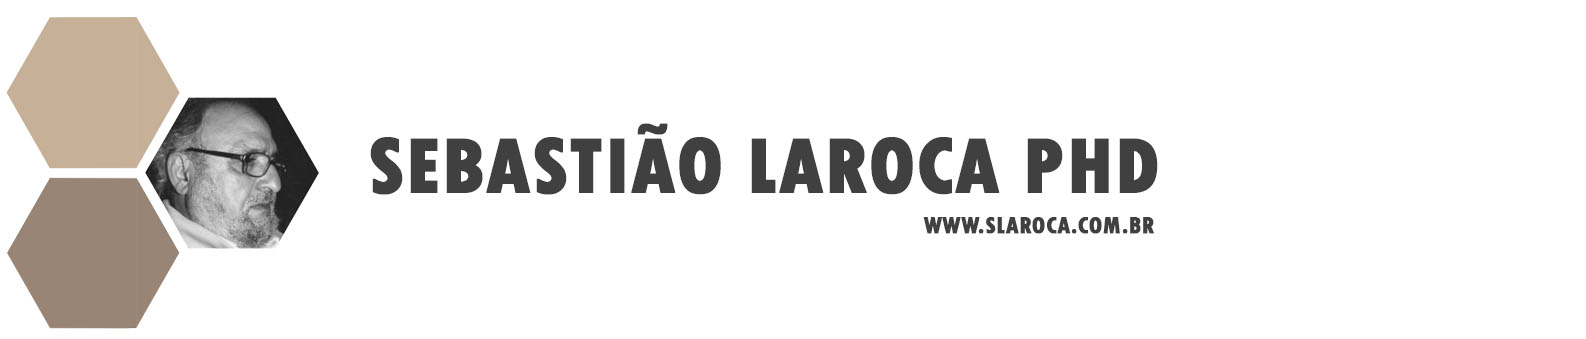 Sebastião Laroca PHD Logo